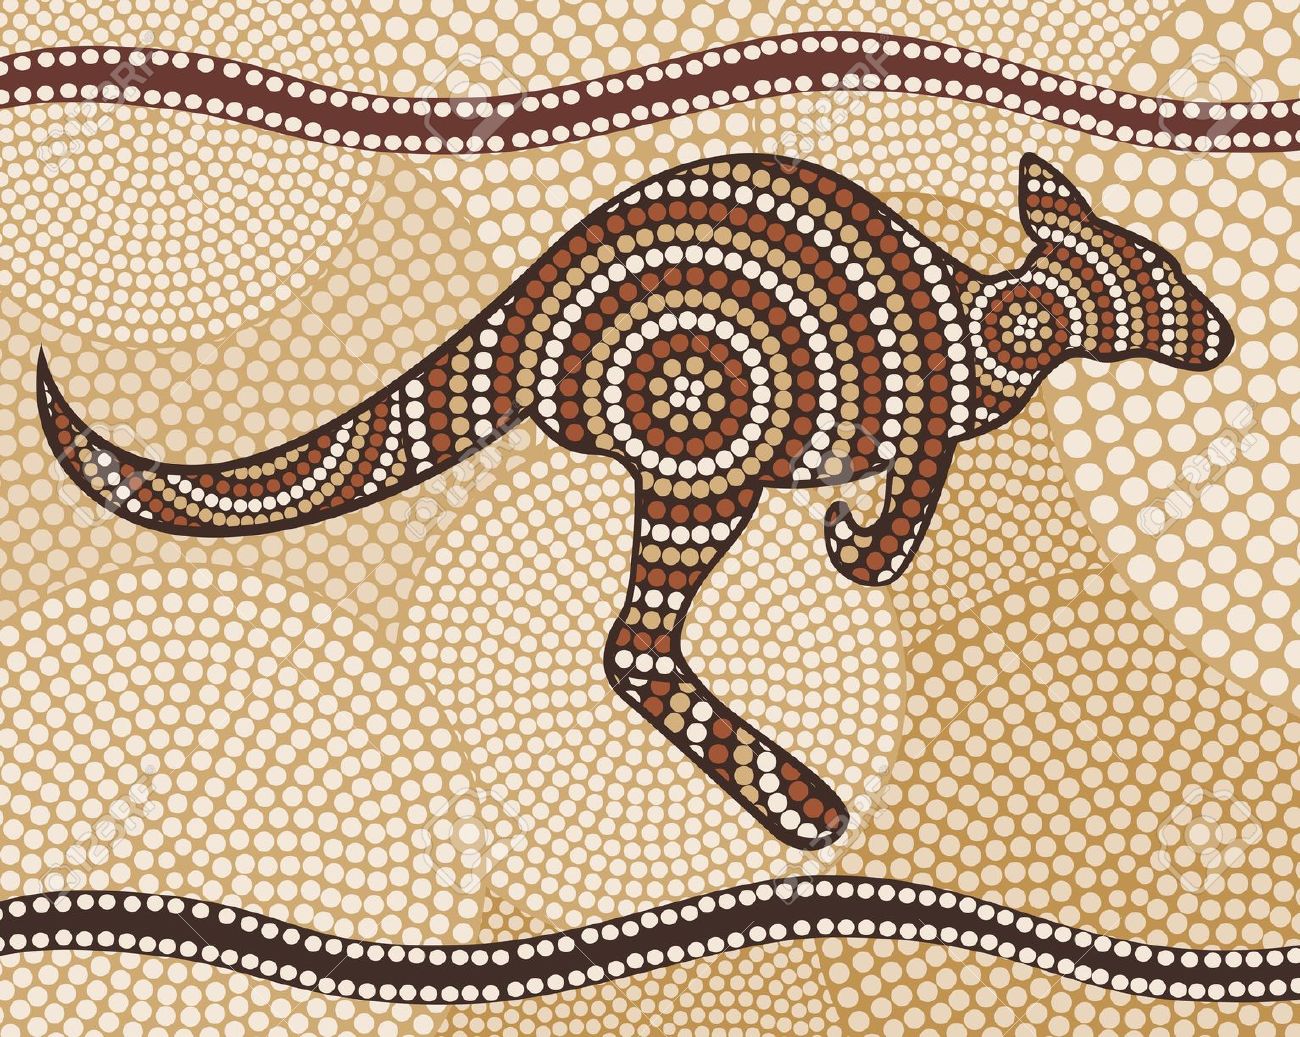 aboriginal-art-life-by-angel-of-rage-on-deviantart-aboriginal-dot-art-dots-art-aboriginal-art